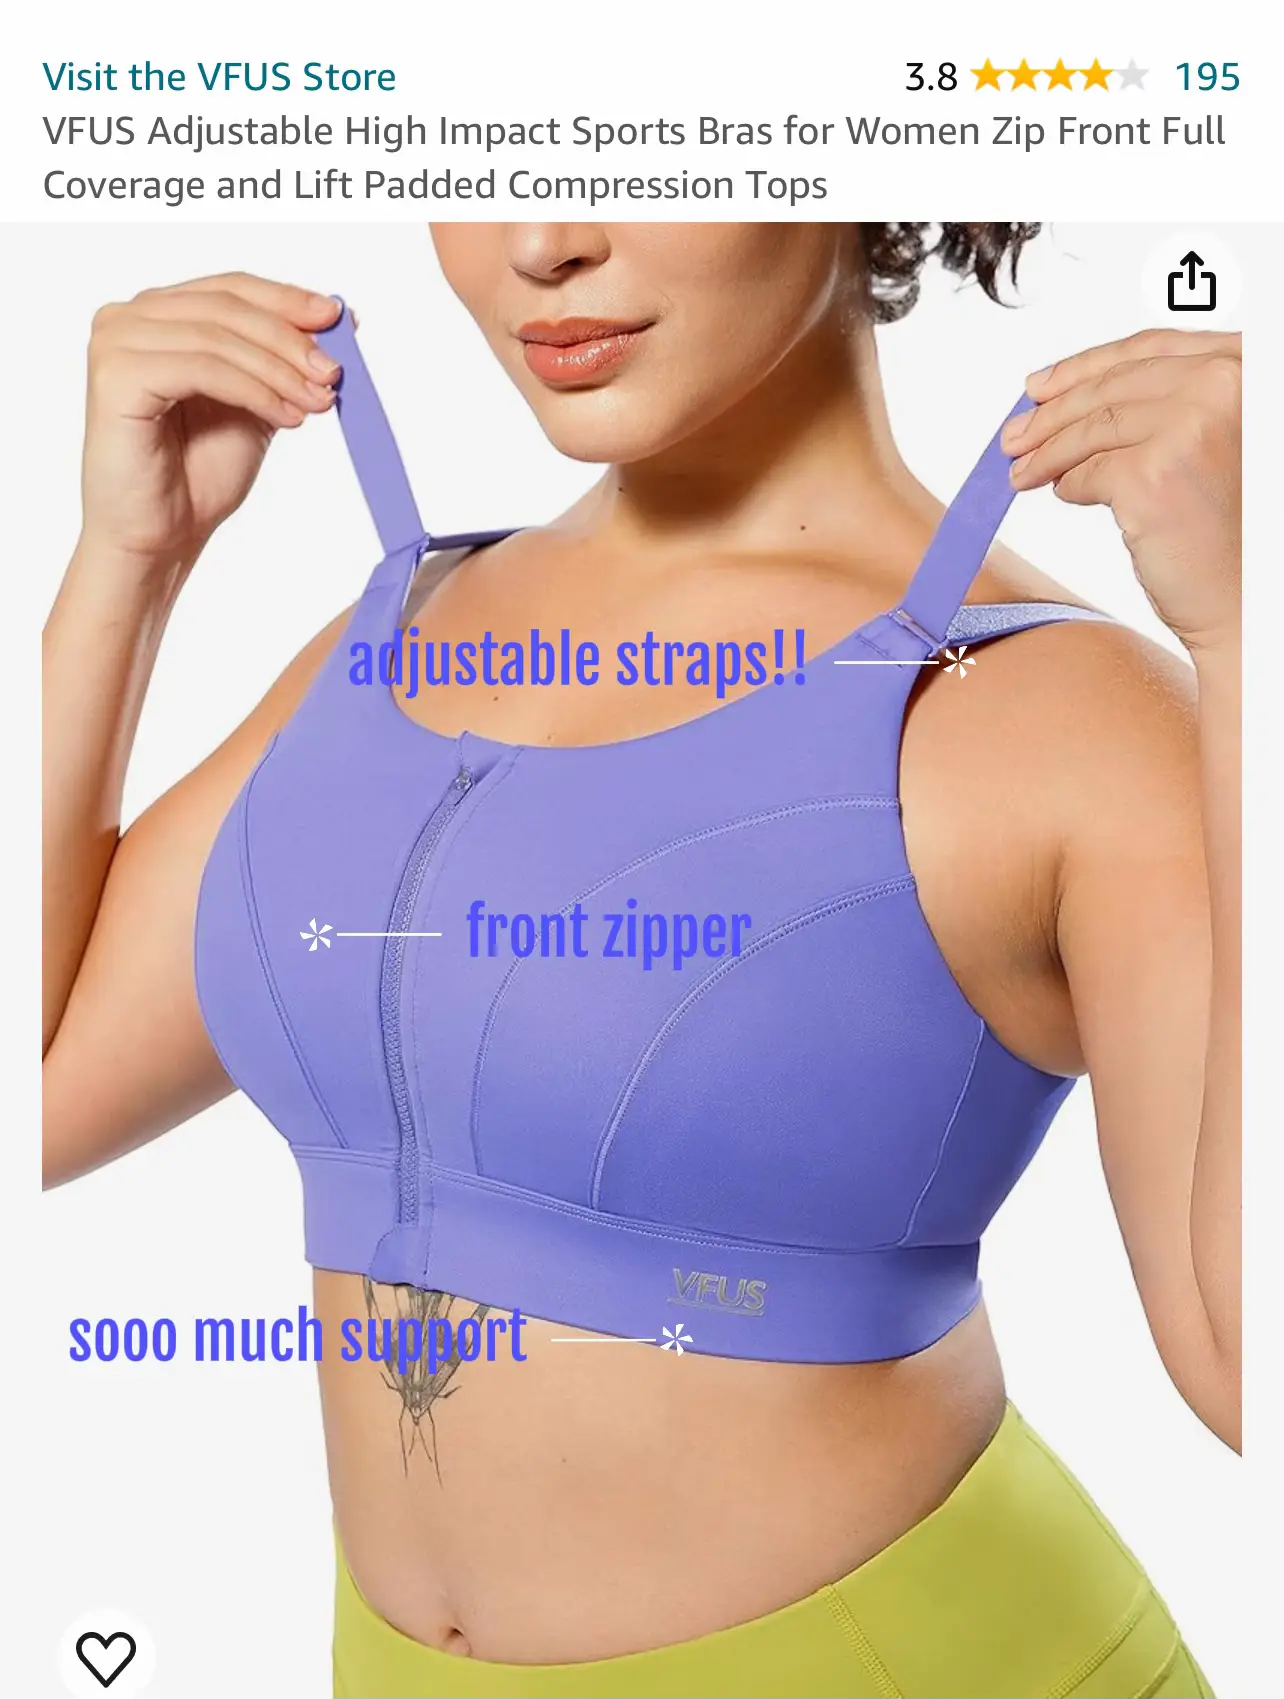 VFUS Adjustable High Impact Sports Bras for Women Zip Front Full